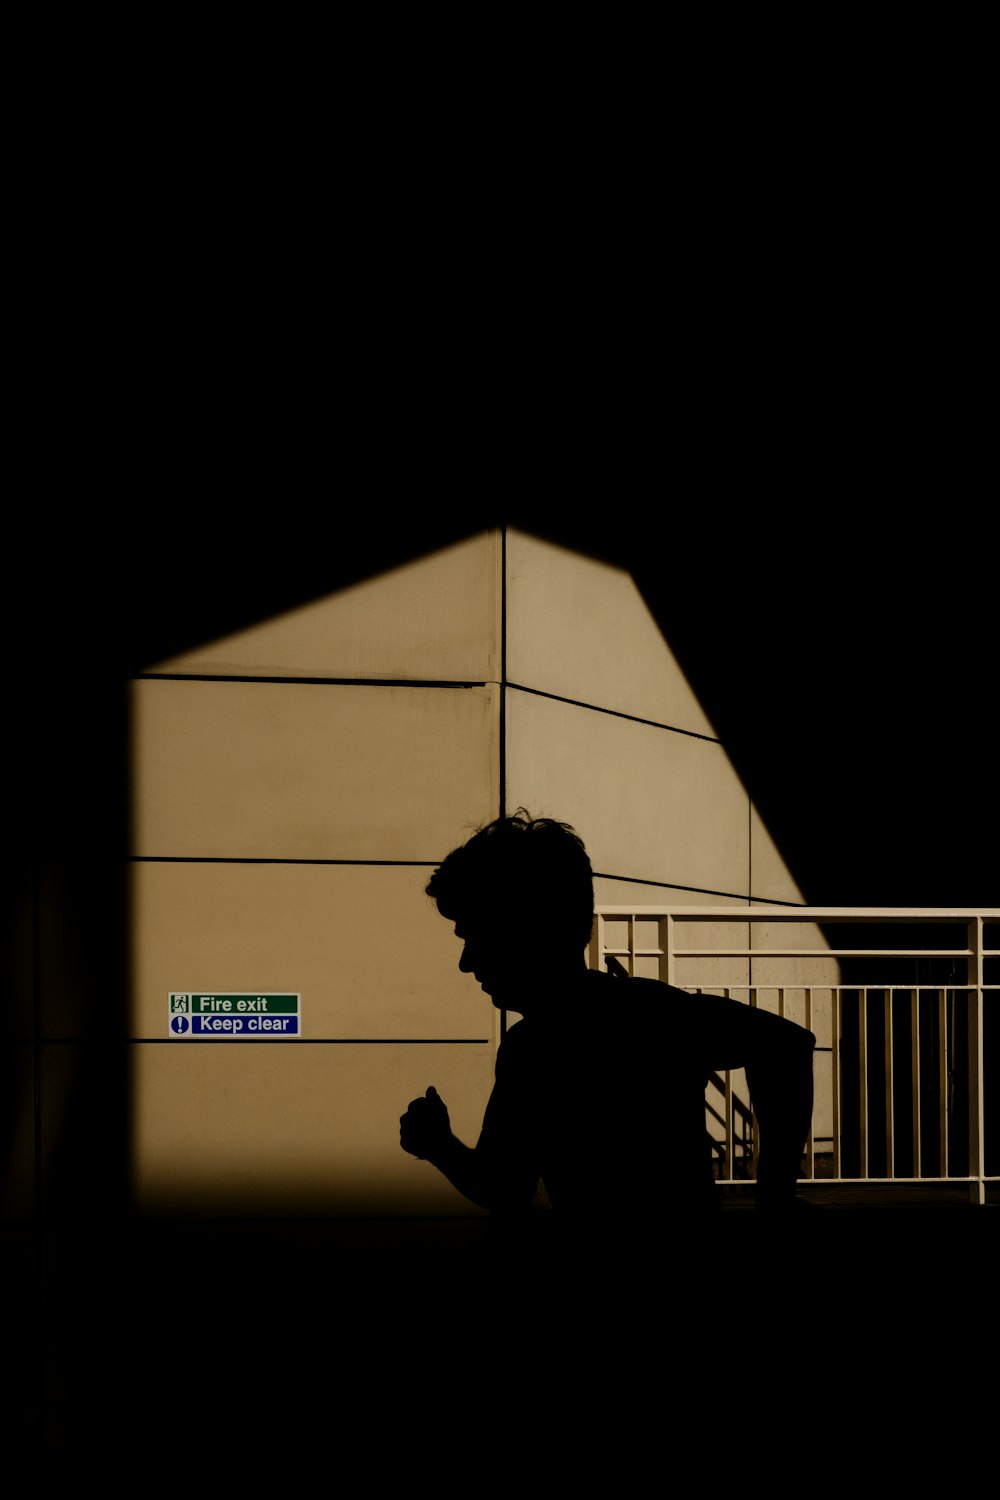 silhouette of running man